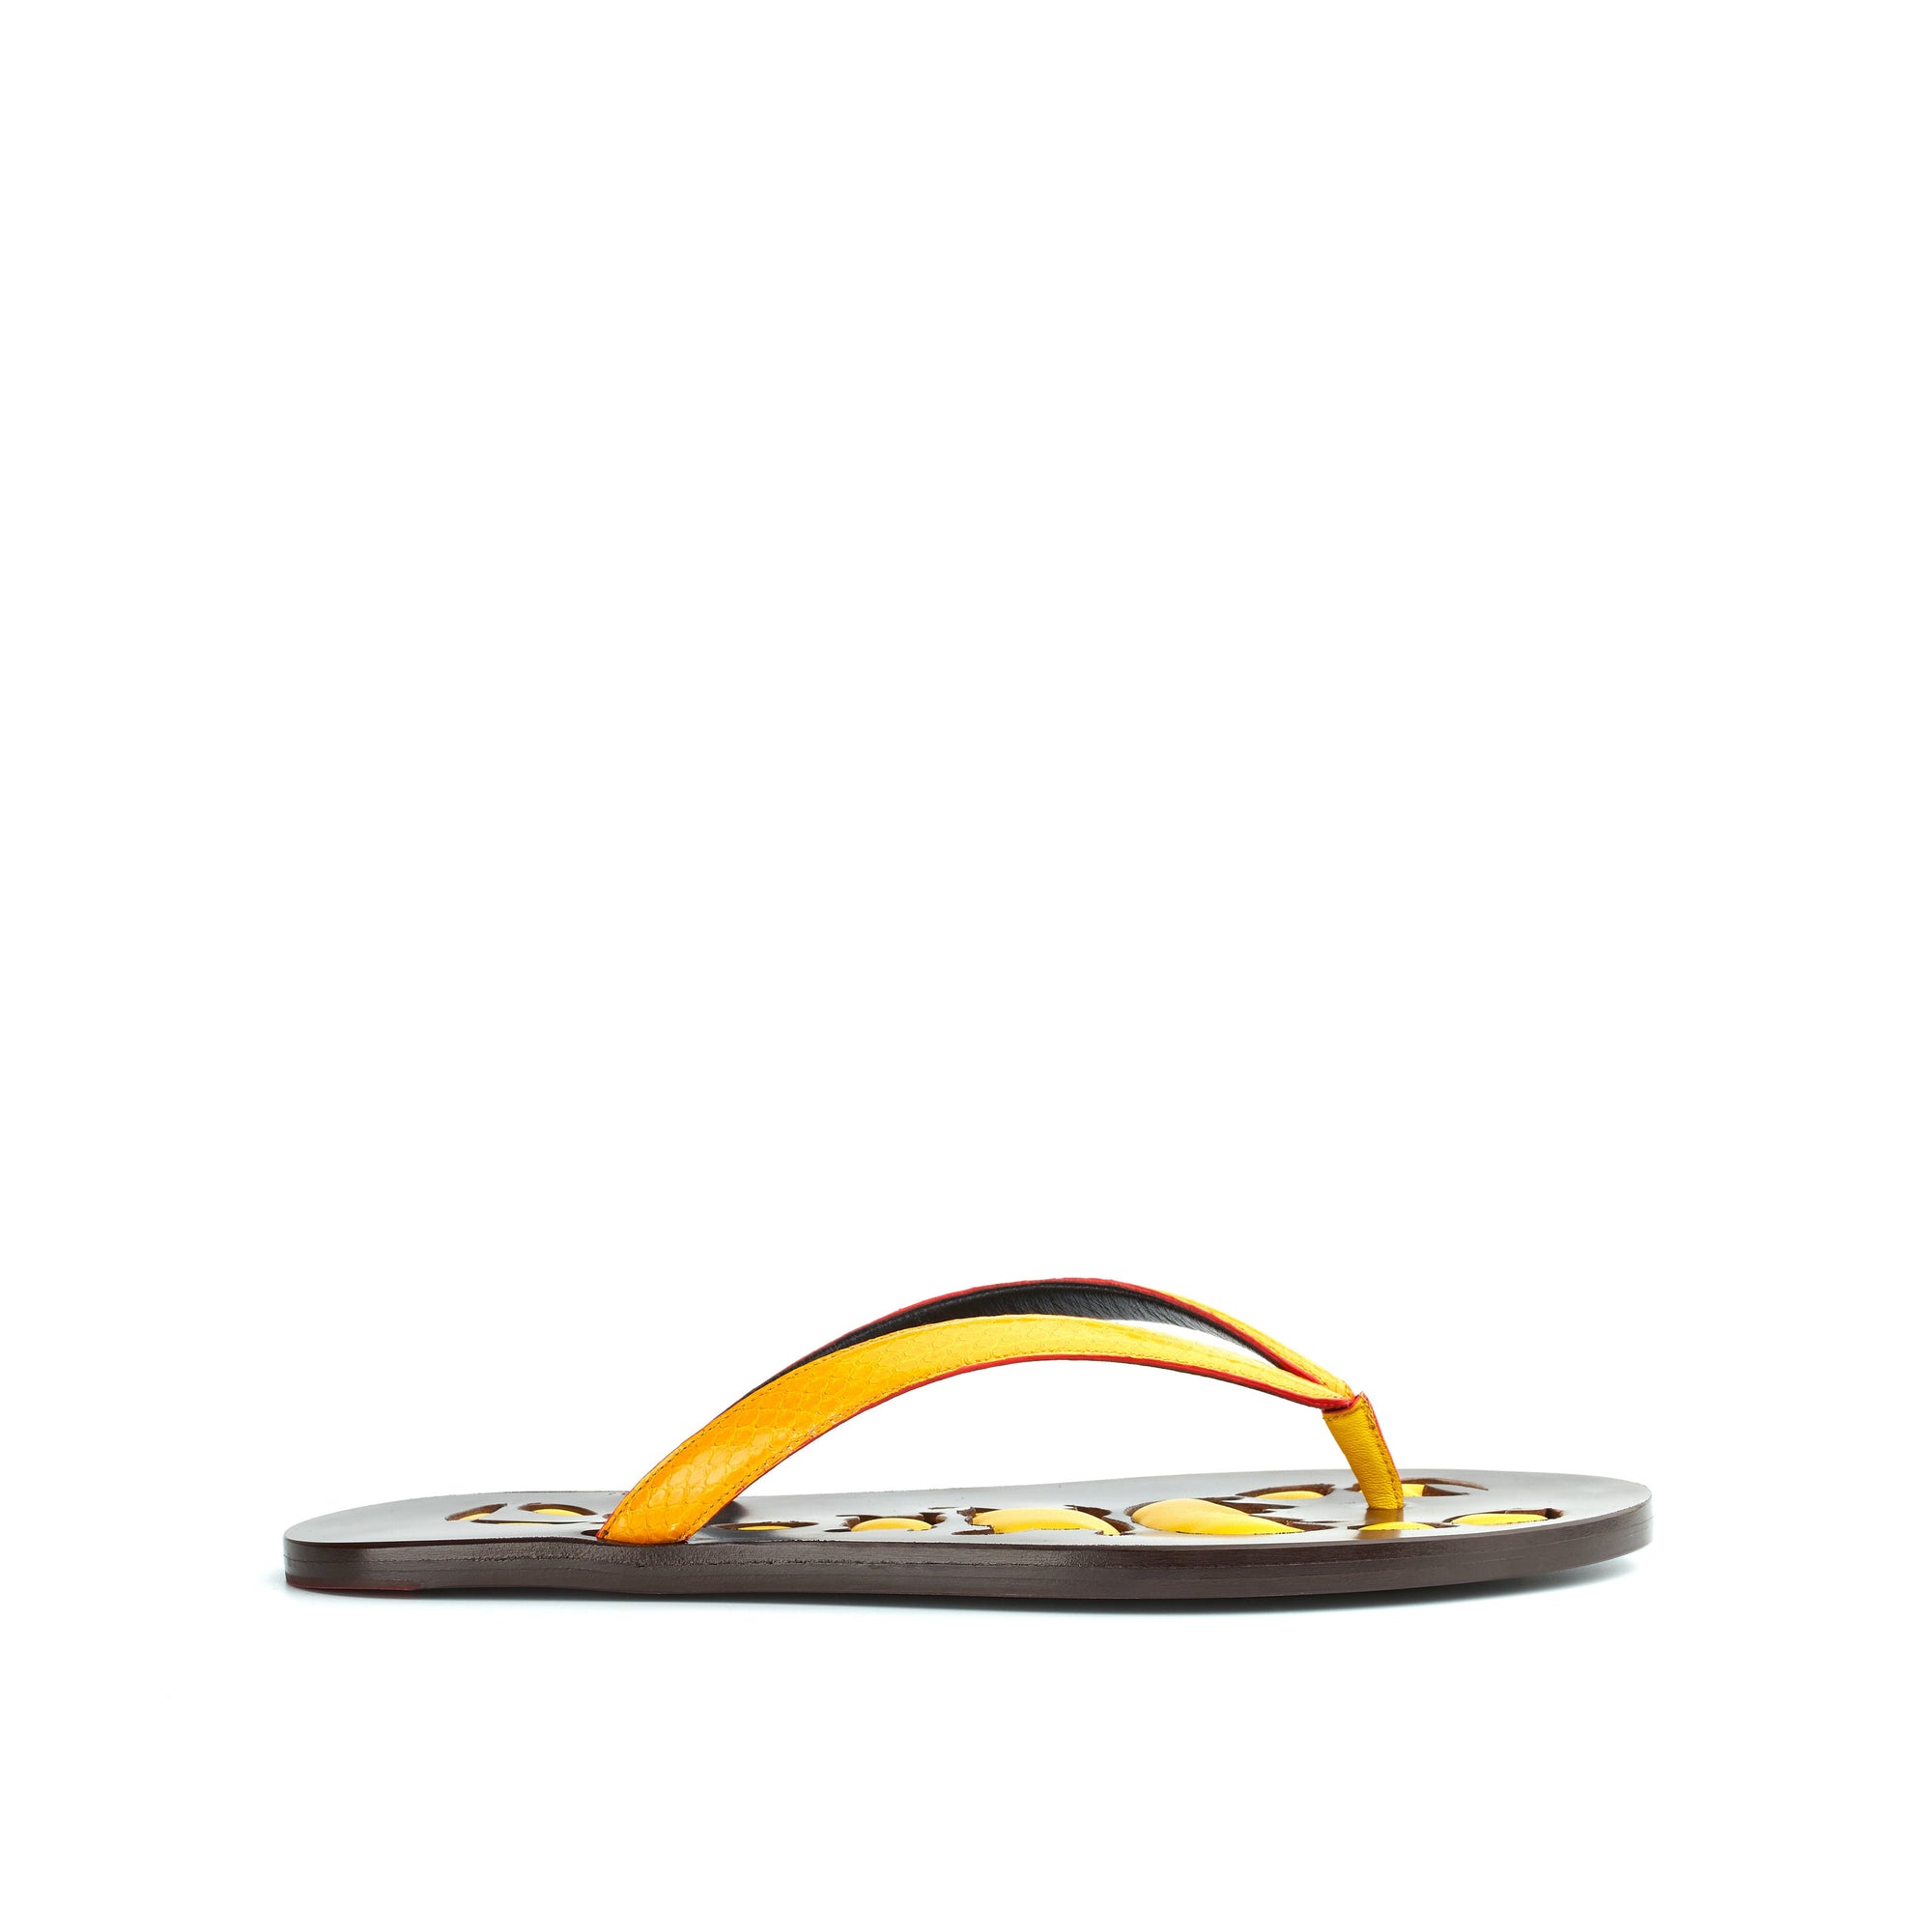 Helga beach sandals in Ayers - Yellow